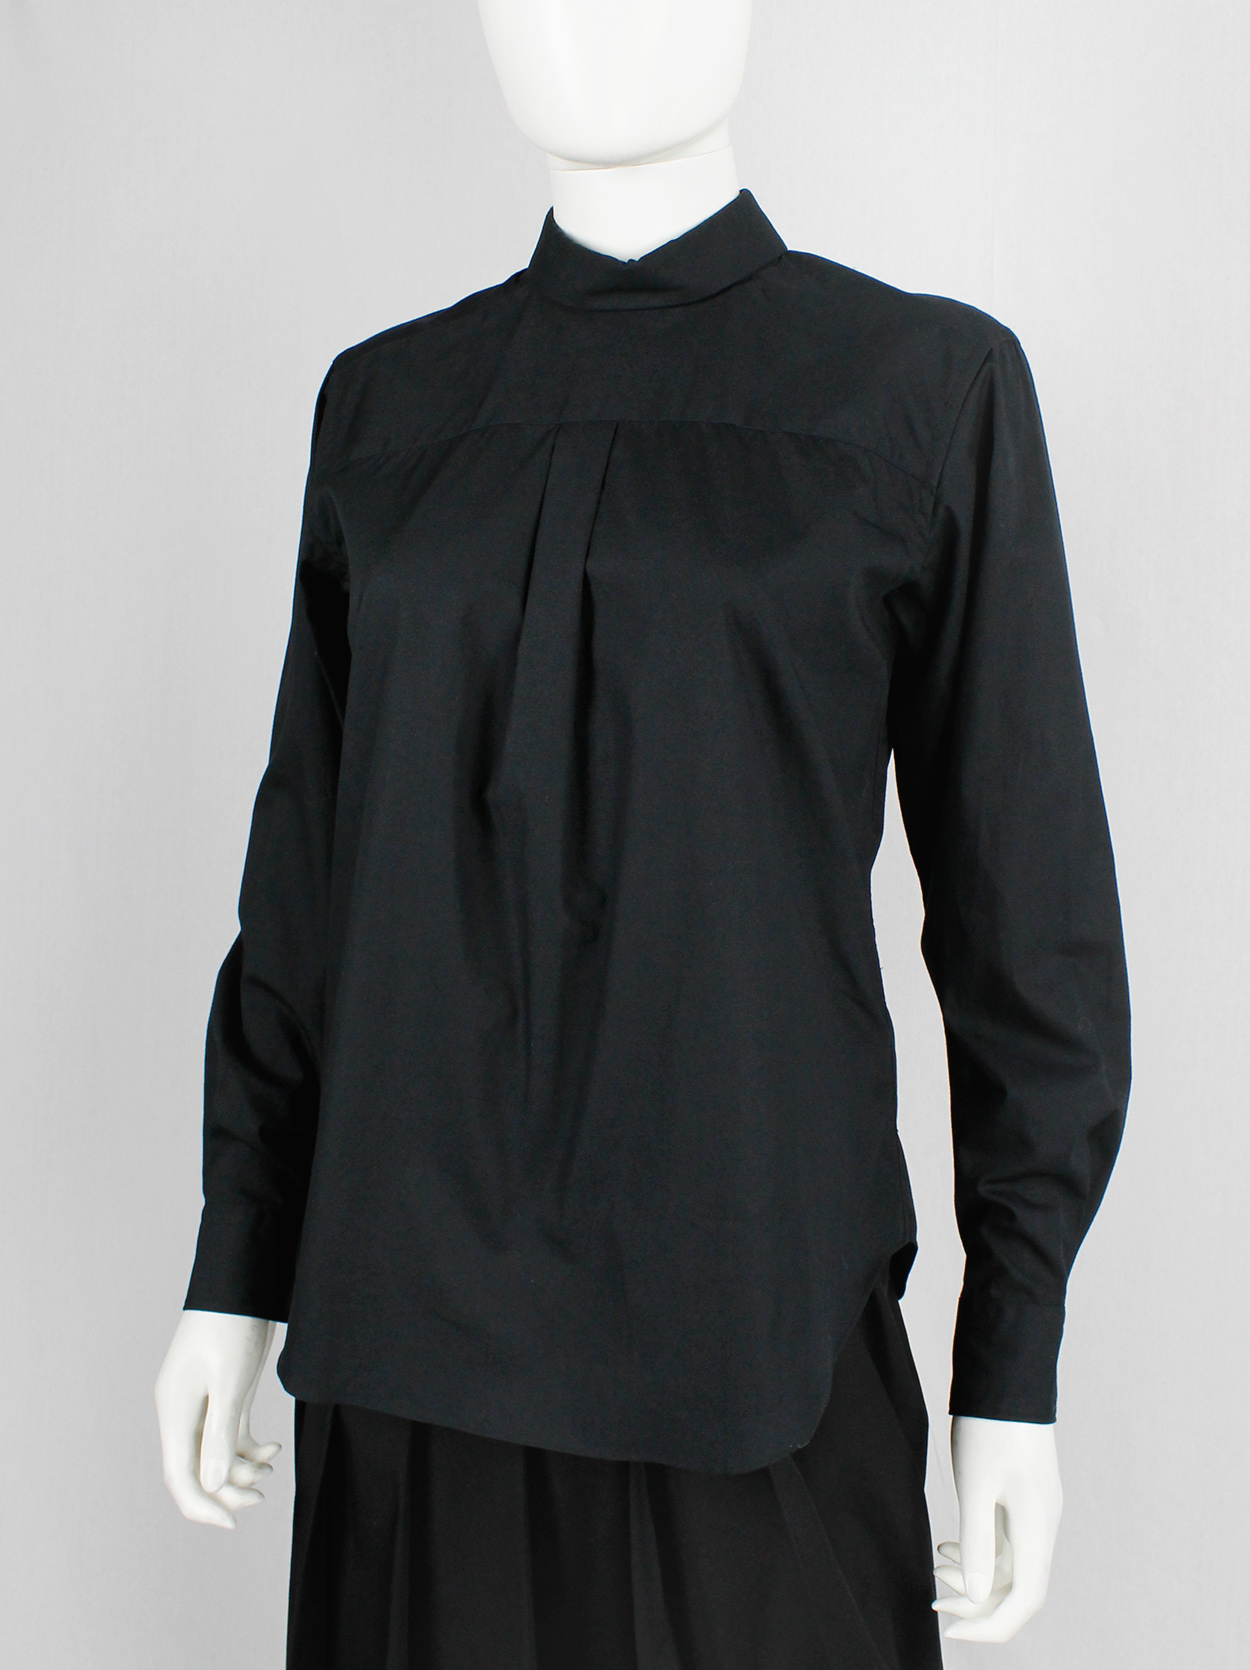 Comme des Garçons BLACK black button-up shirt worn backwards — AD 2014